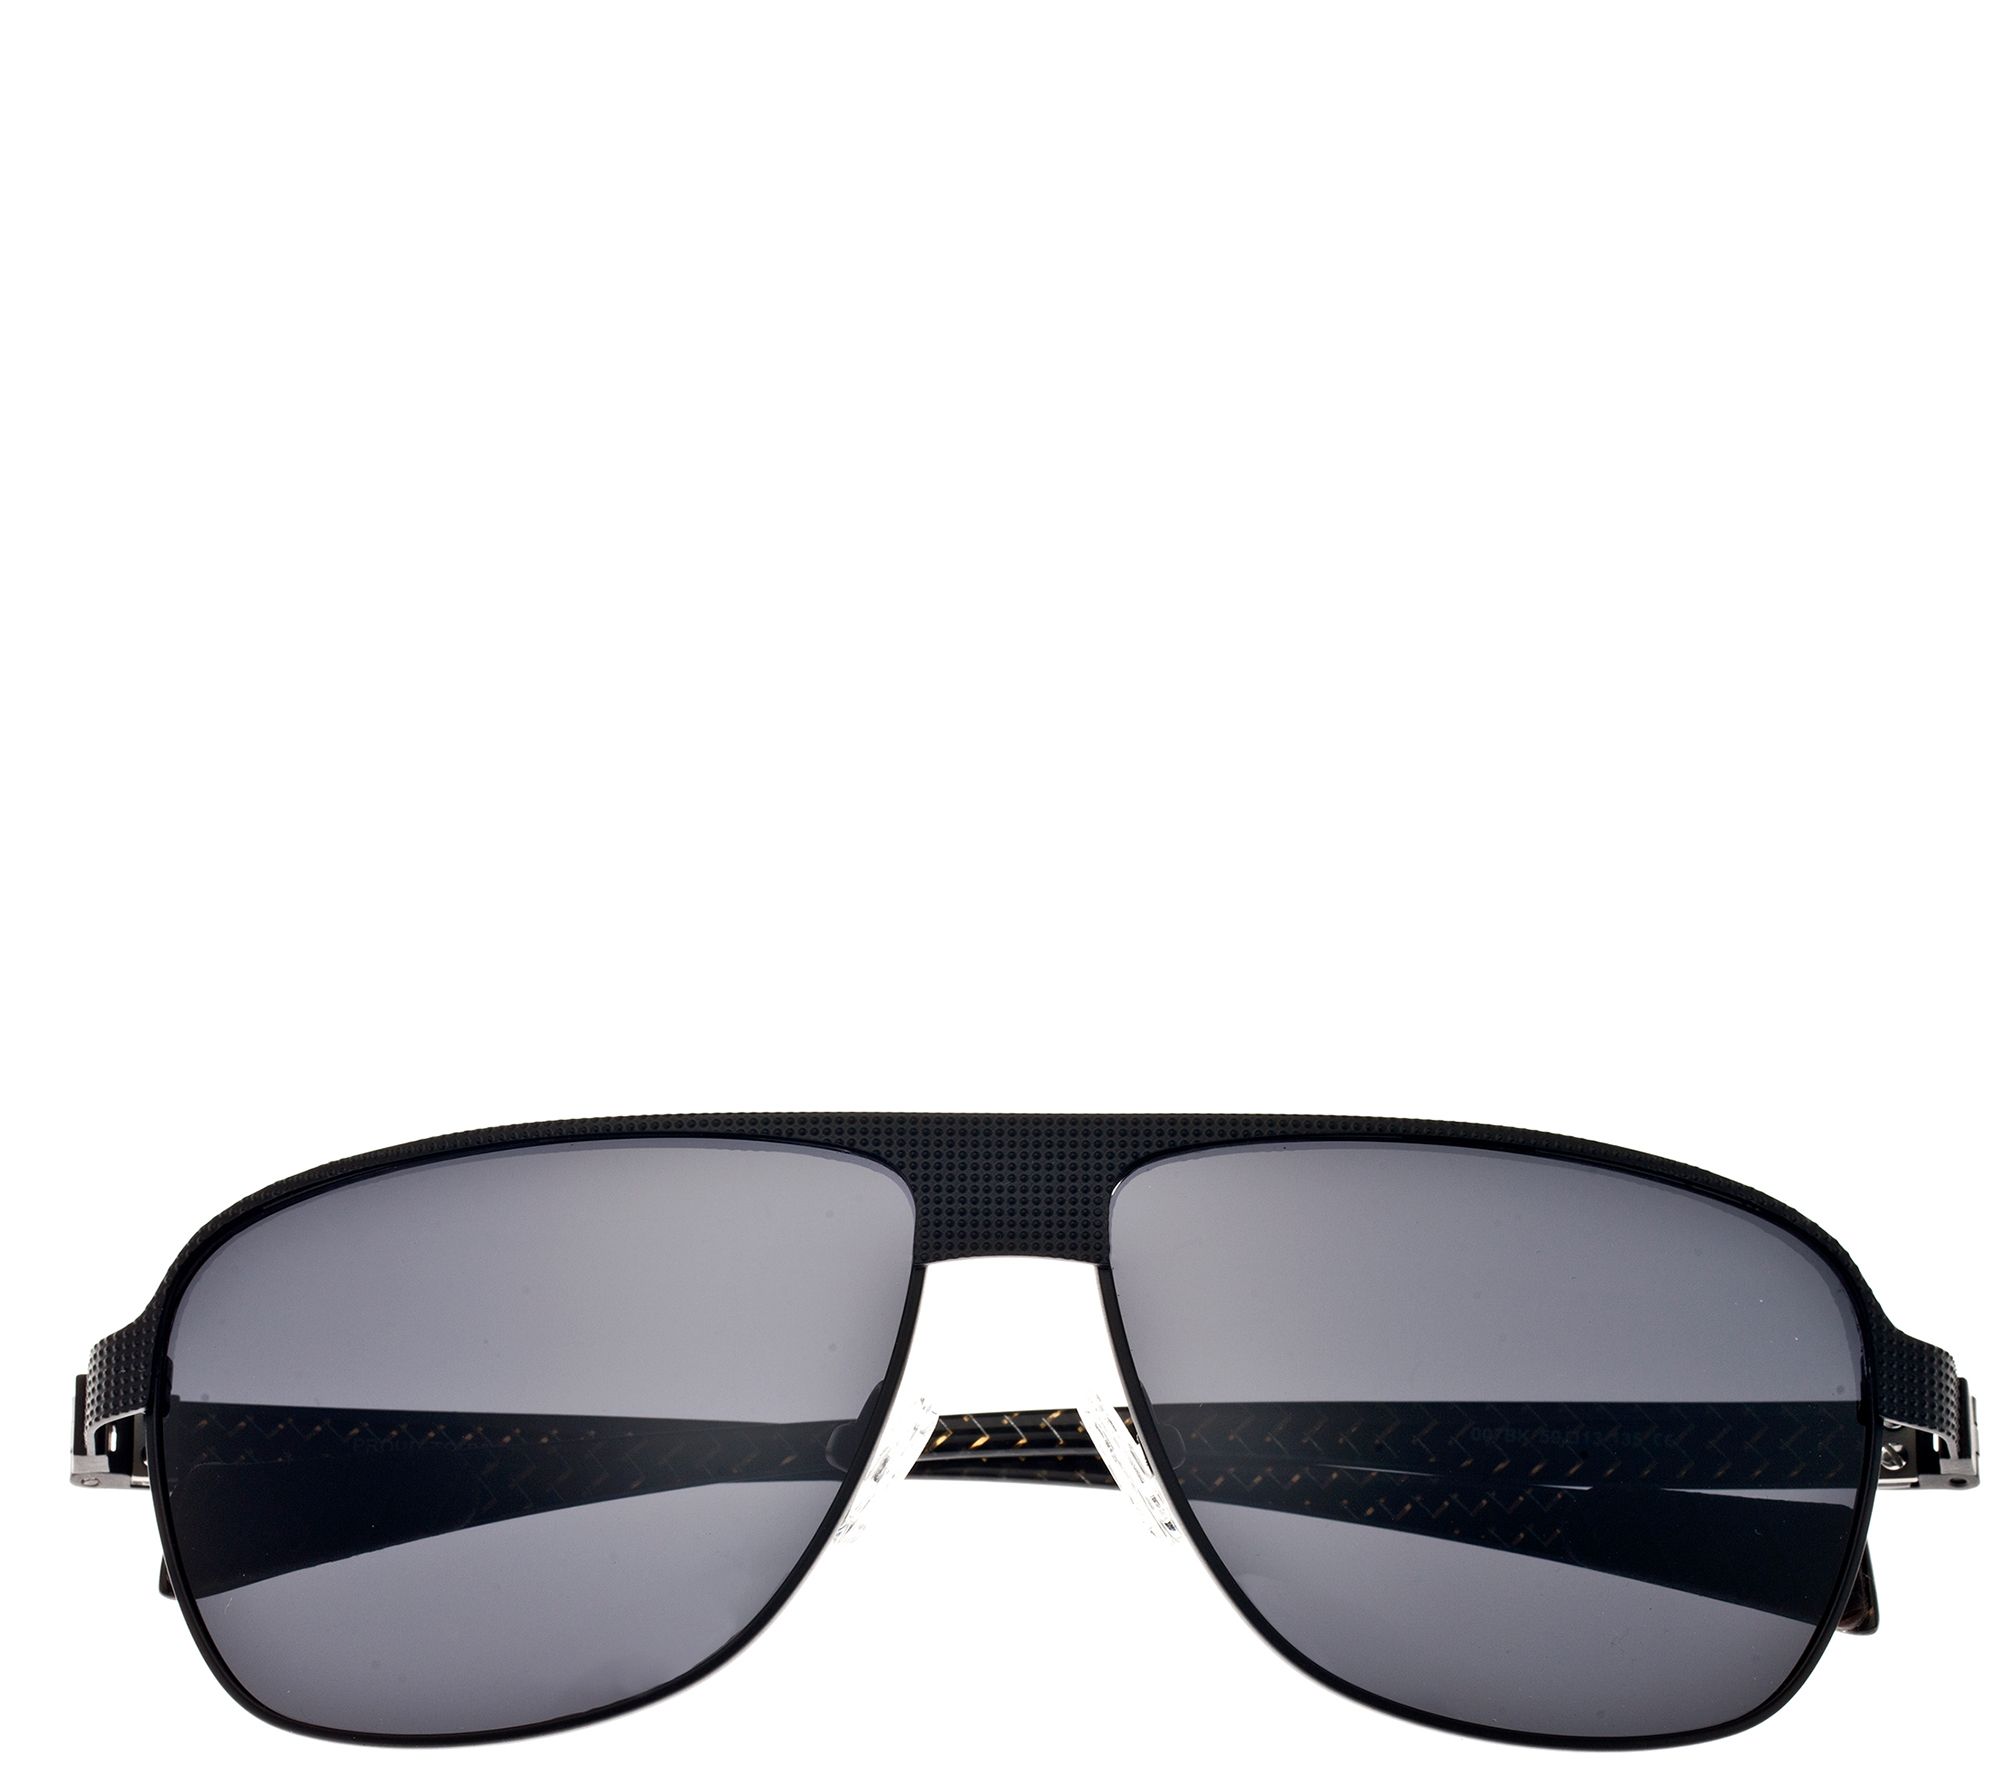 Breed Hardwell Carbon Fiber Polarized Men's Sunglasses 